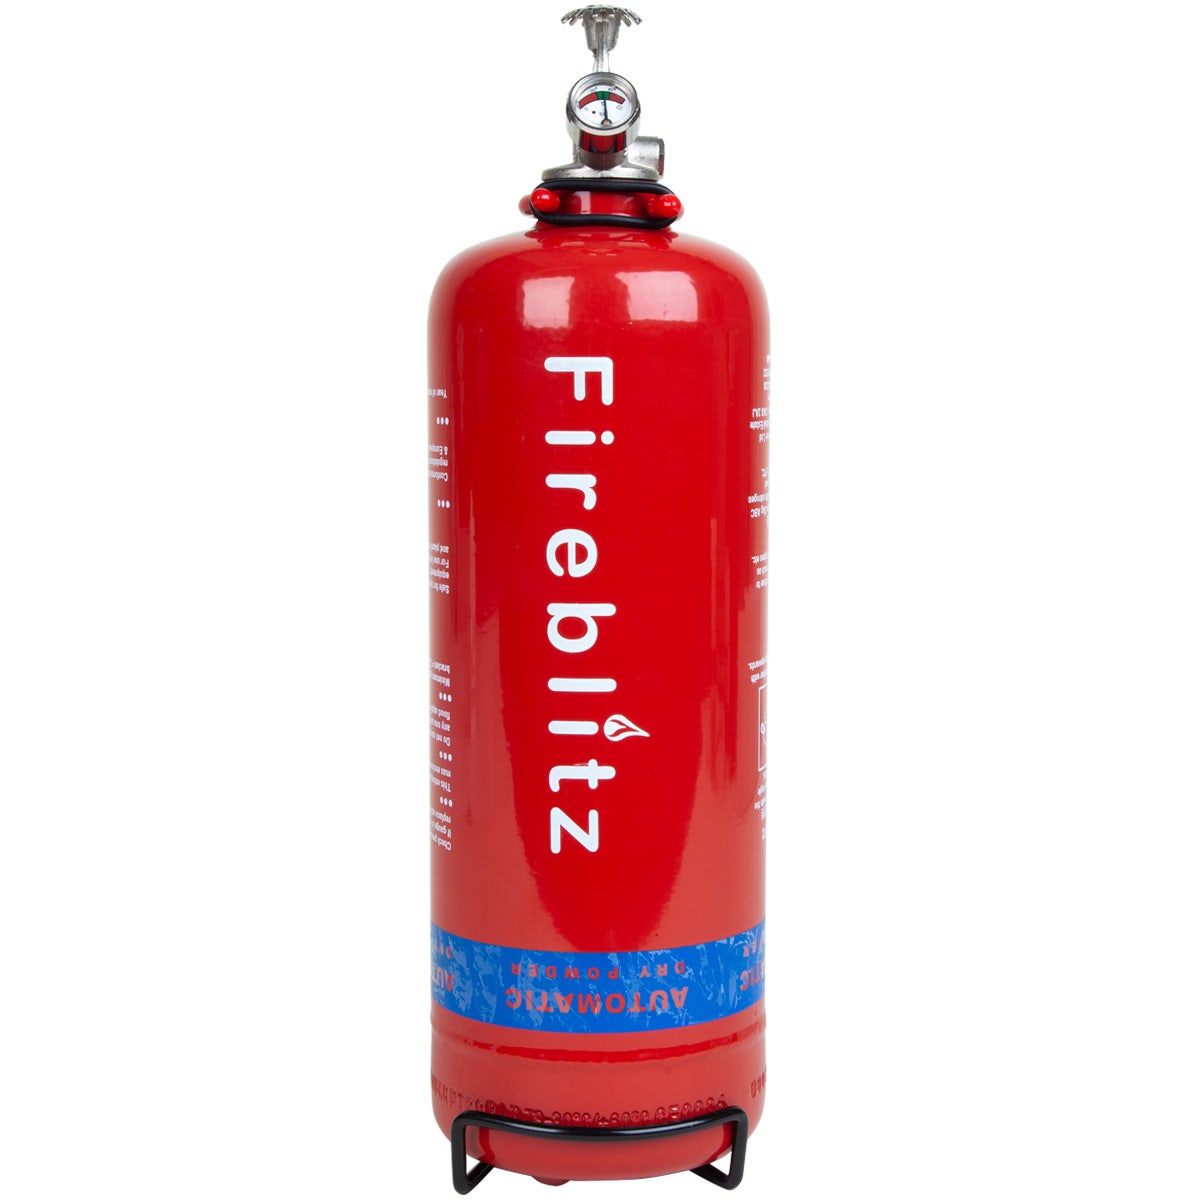 Fireblitz Dry Powder  ABC Automatic Extinguisher (2KG)